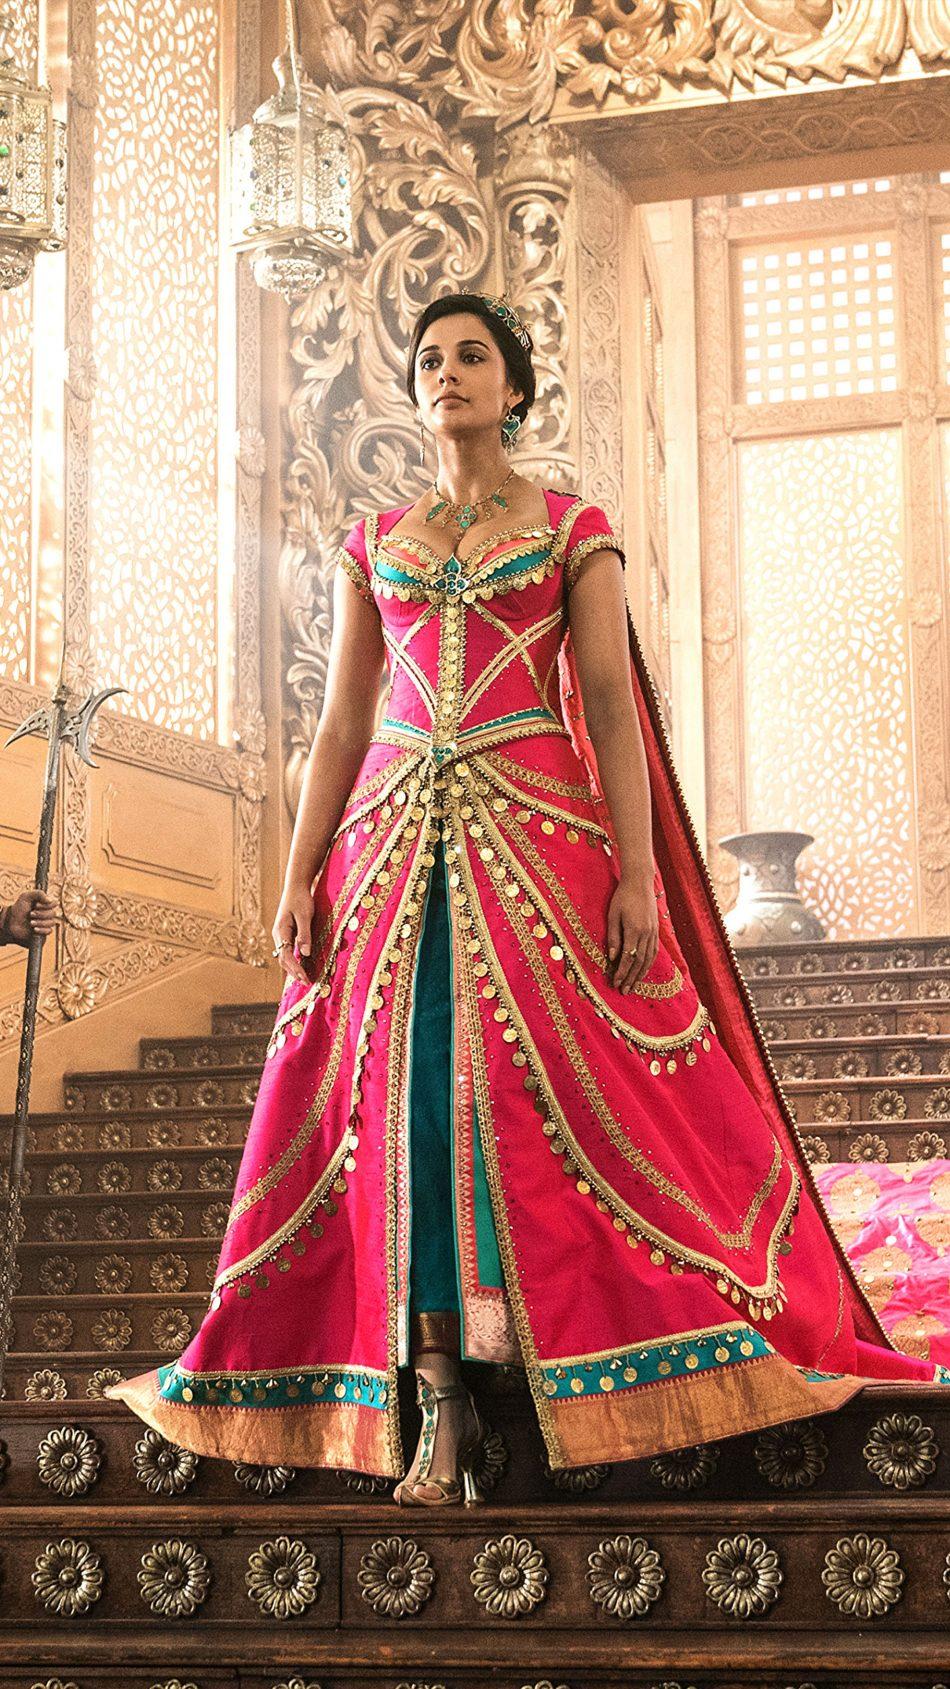 Download Princess Jasmine In Aladdin (Naomi Scott) Free Pure 4K